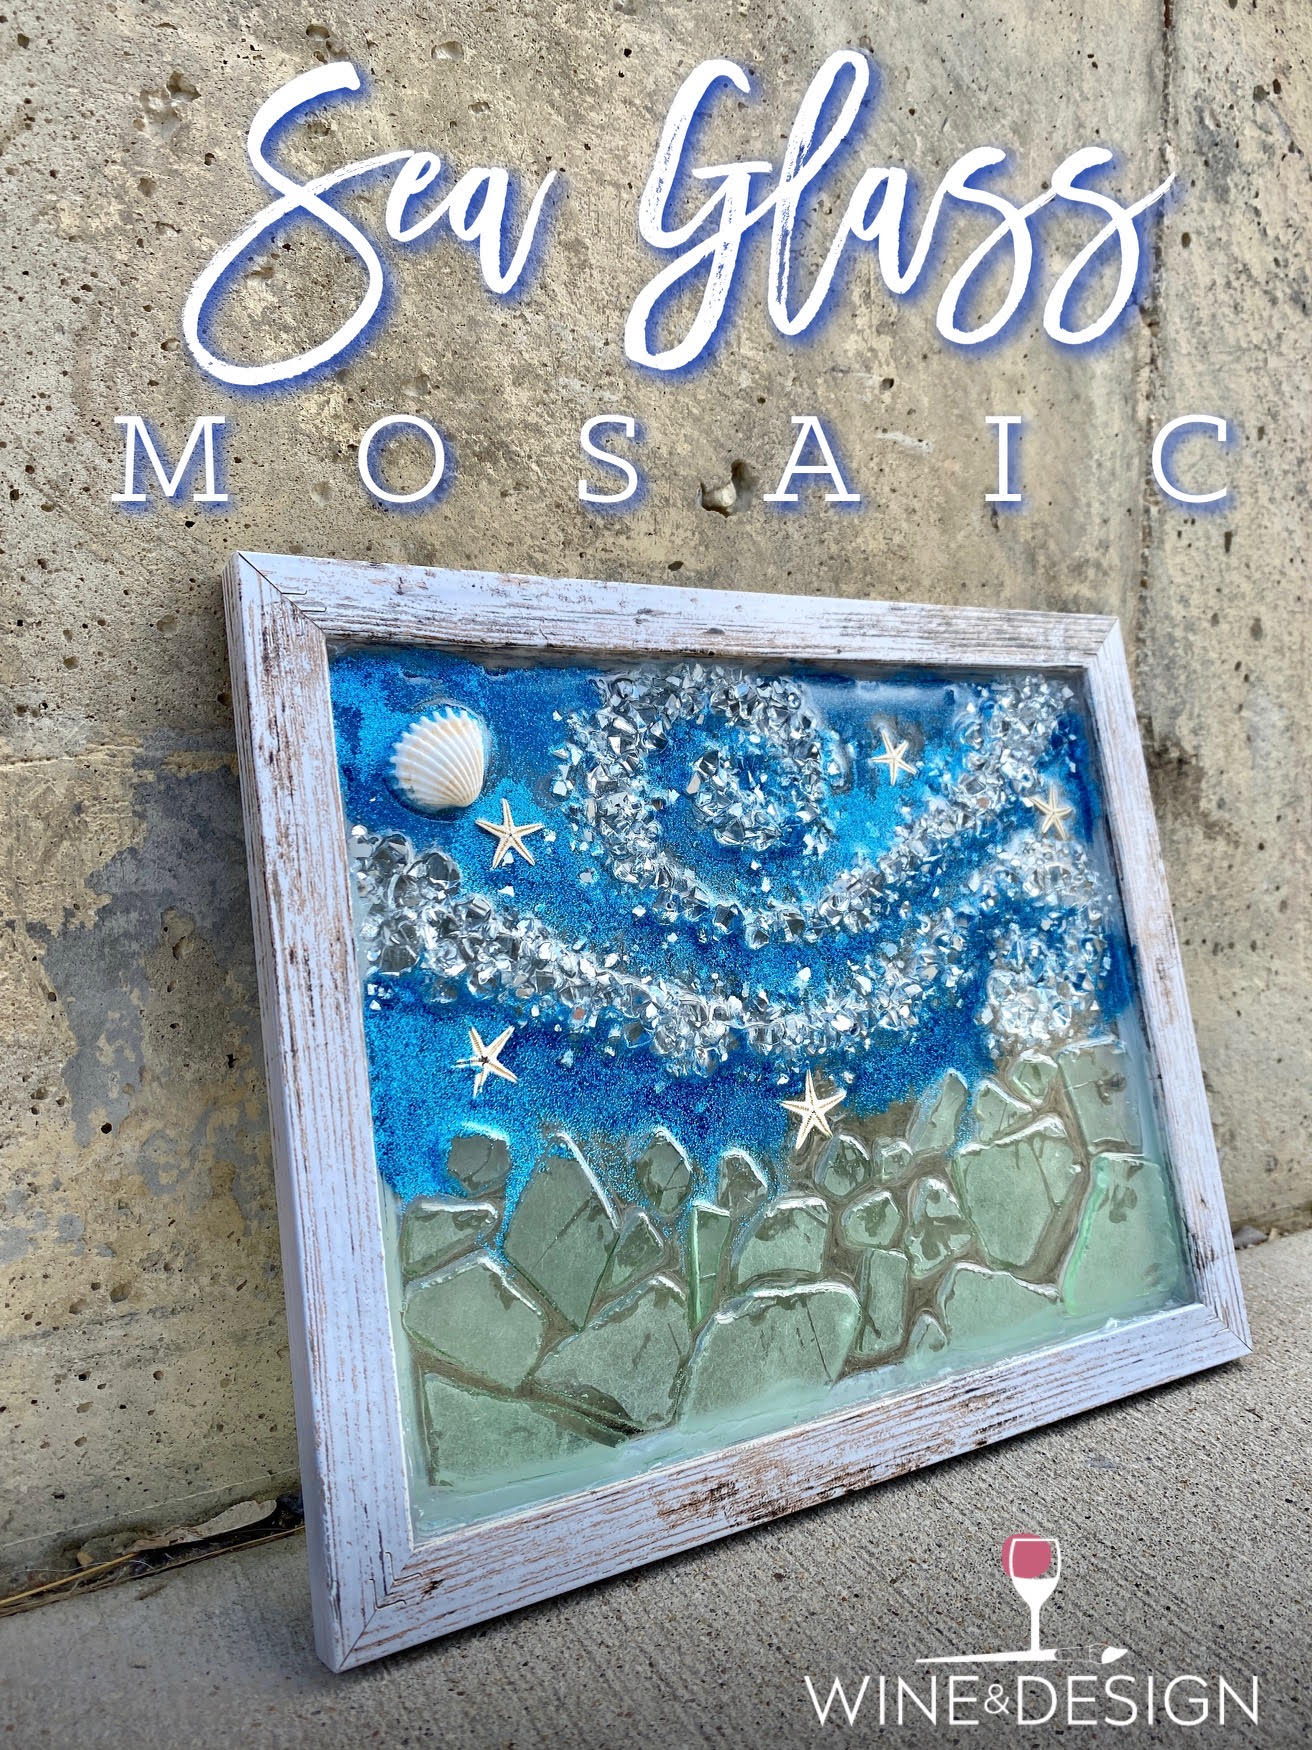 Sea Glass Mosaic - You create any design!